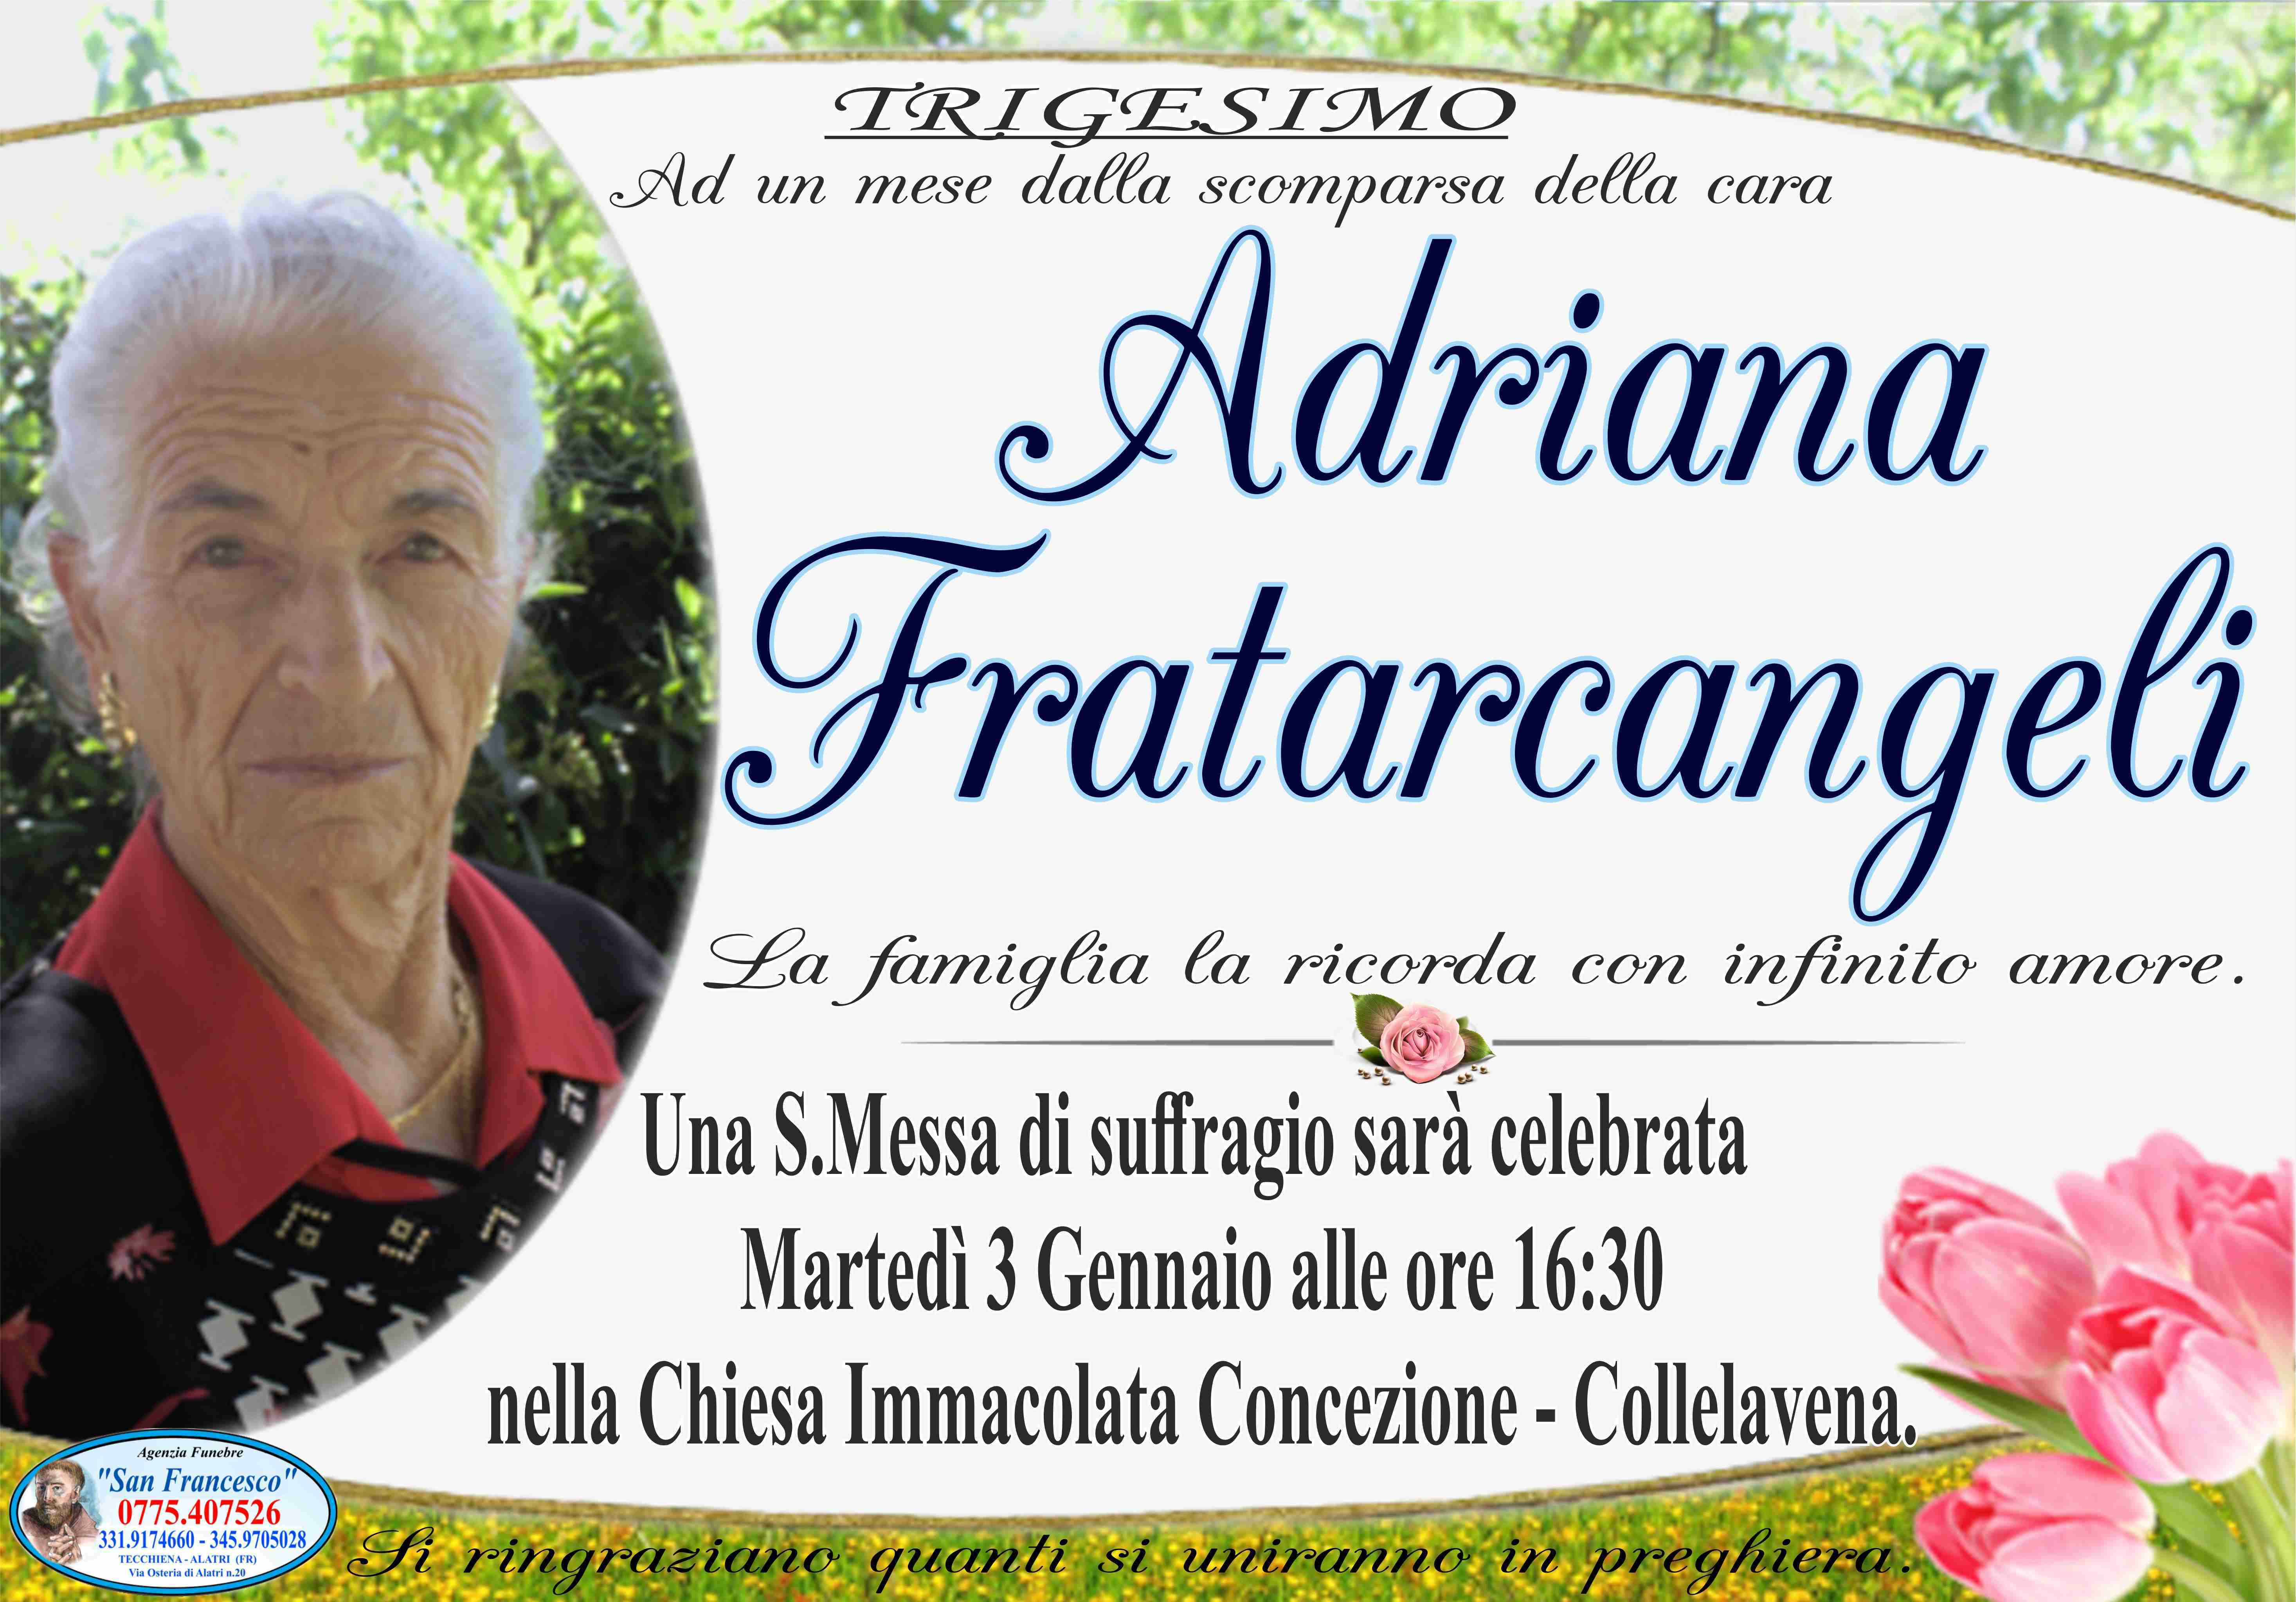 Adriana Fratarcangeli